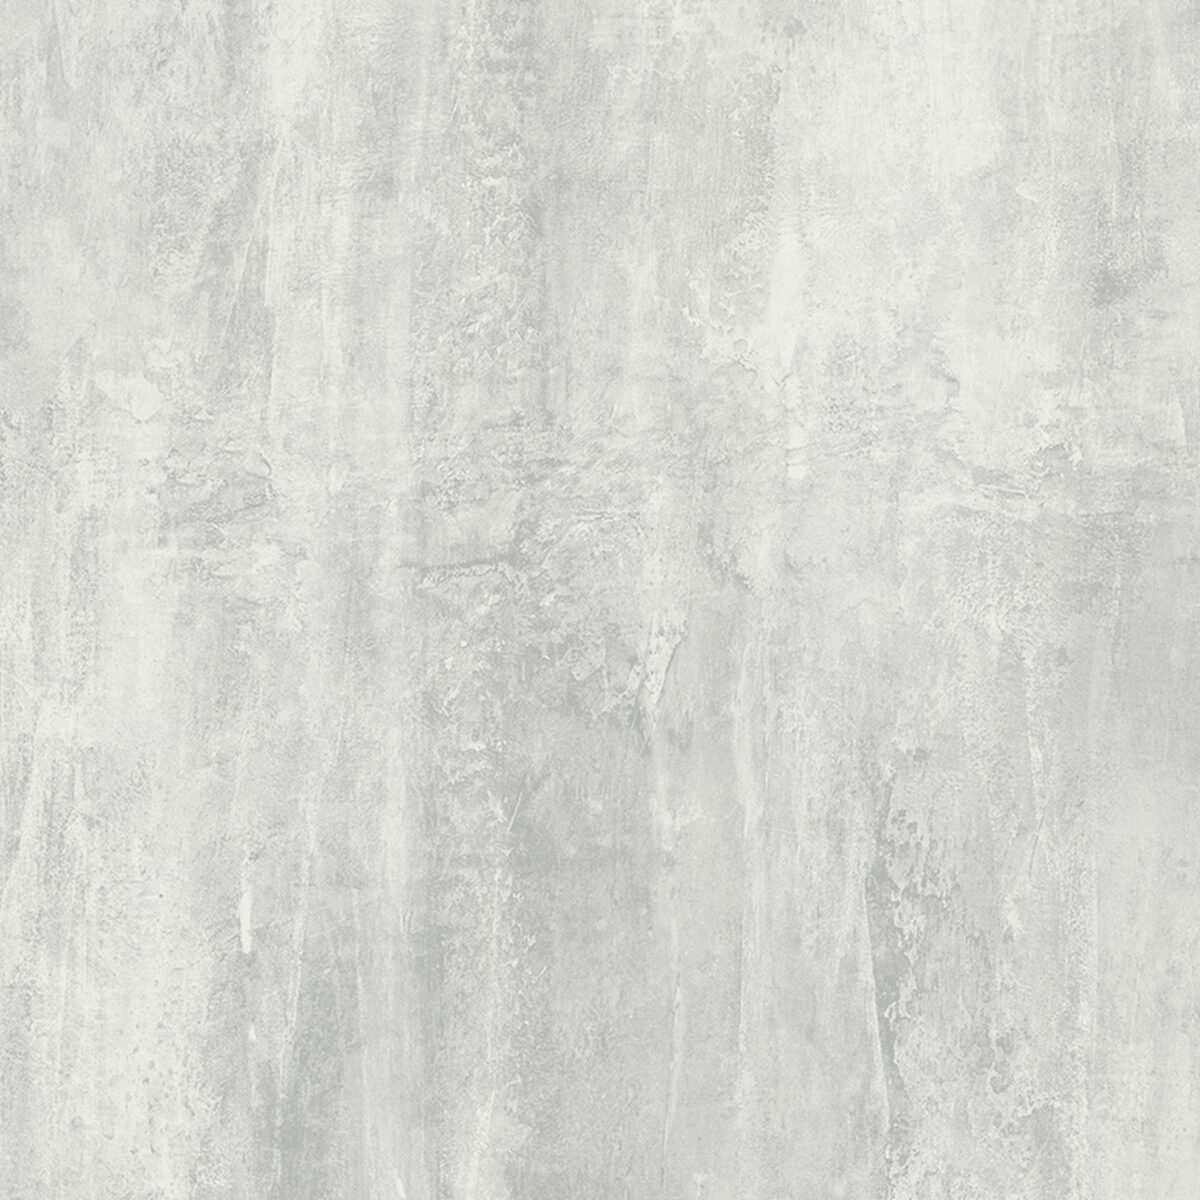 URBAN CONCRETE - Tamaños (1,22 x 2,44m)  |  Espesor (0.7mm)